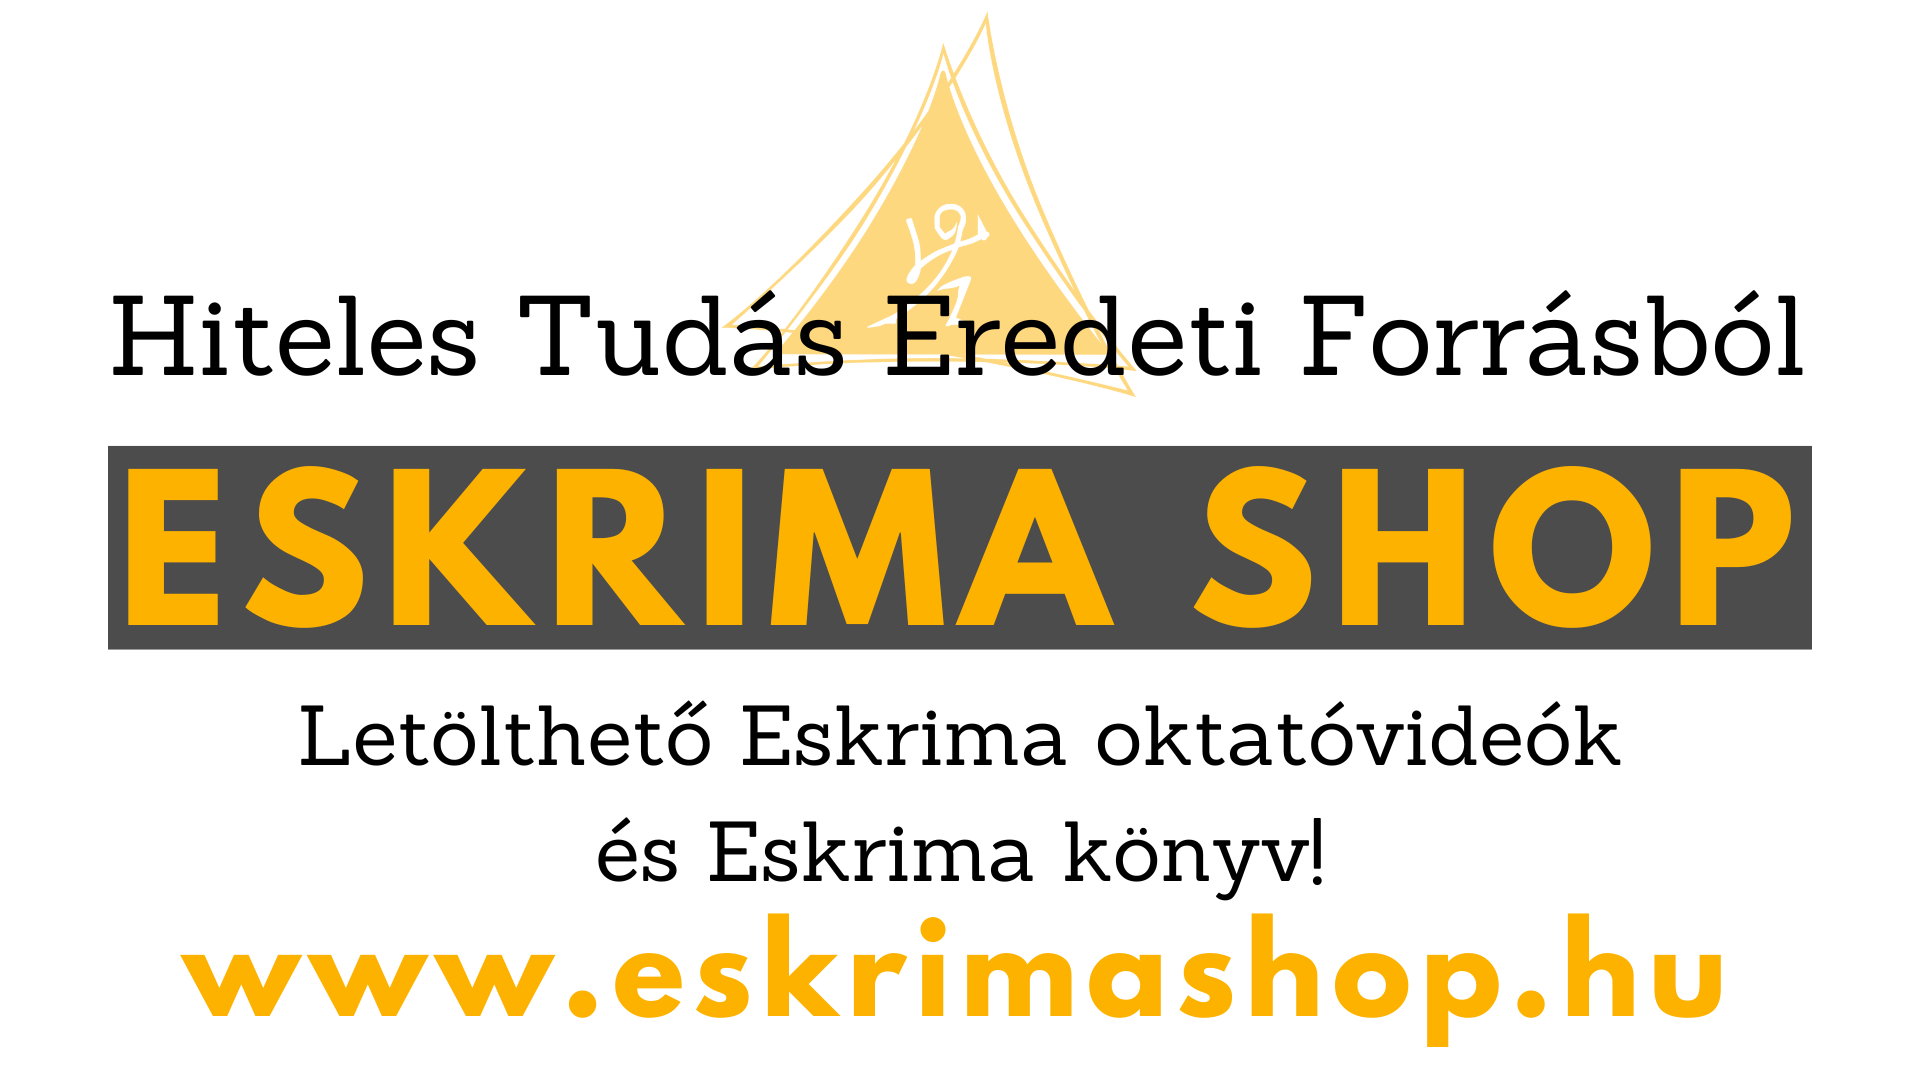 Megnyílt online Eskrima boltunk a www.ESKRIMASHOP.hu!